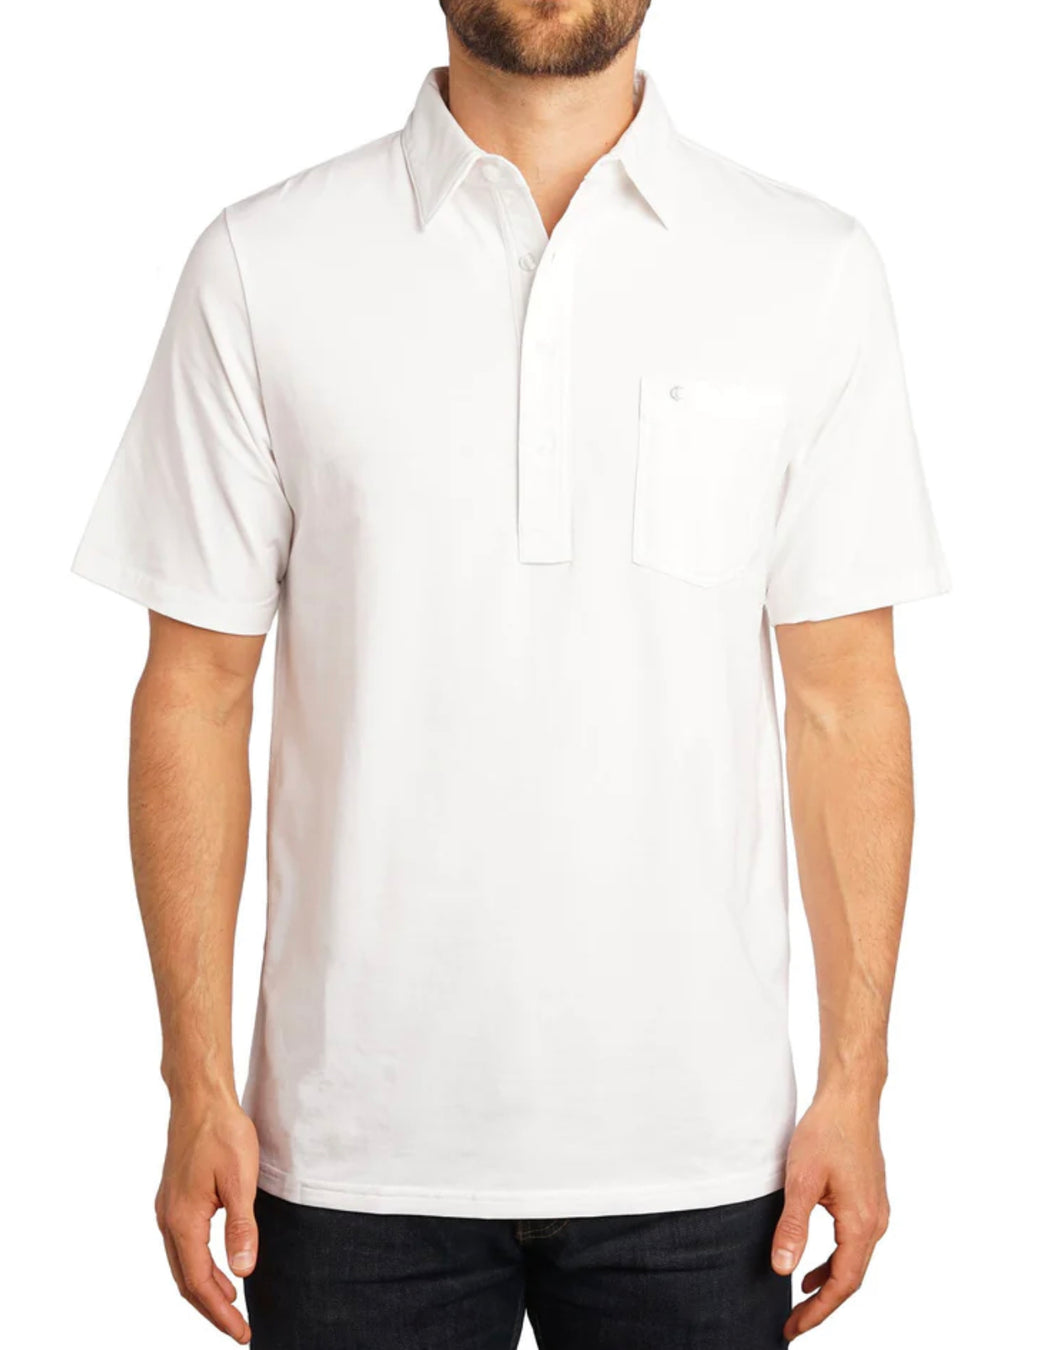 Top-Shelf Players Shirt - Great White